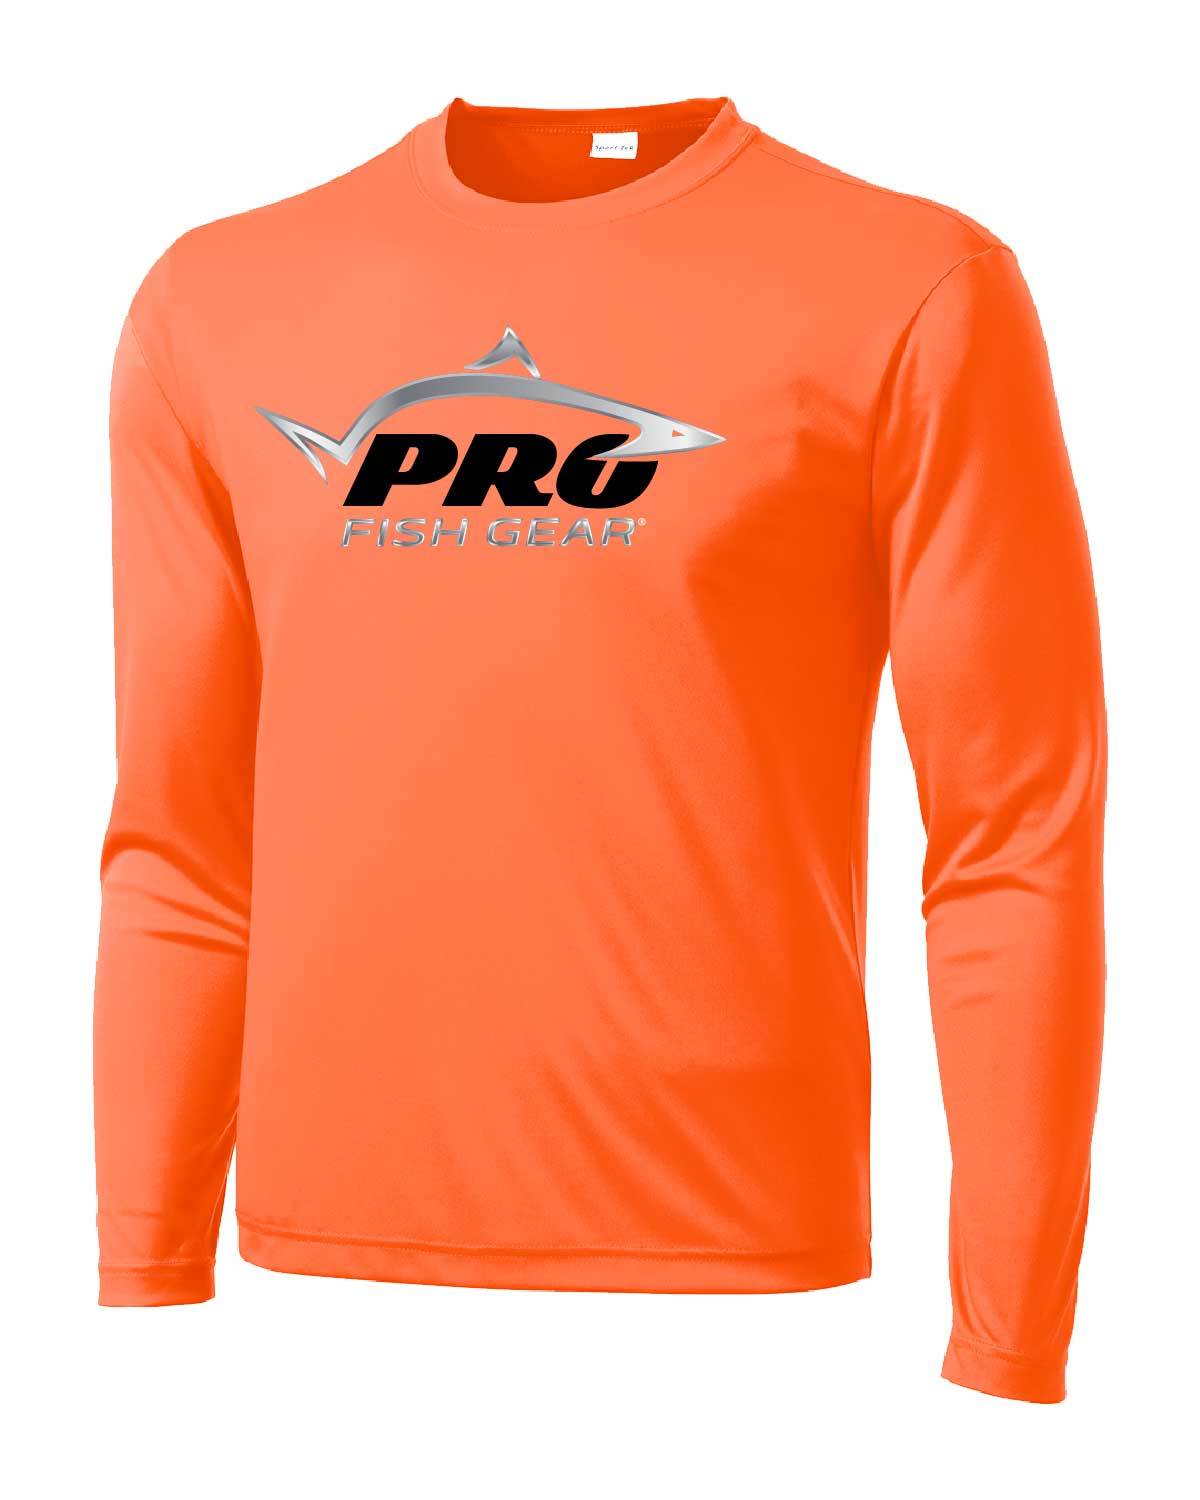 Pro Fish Gear Long Sleeve Shirt - Blaze Orange